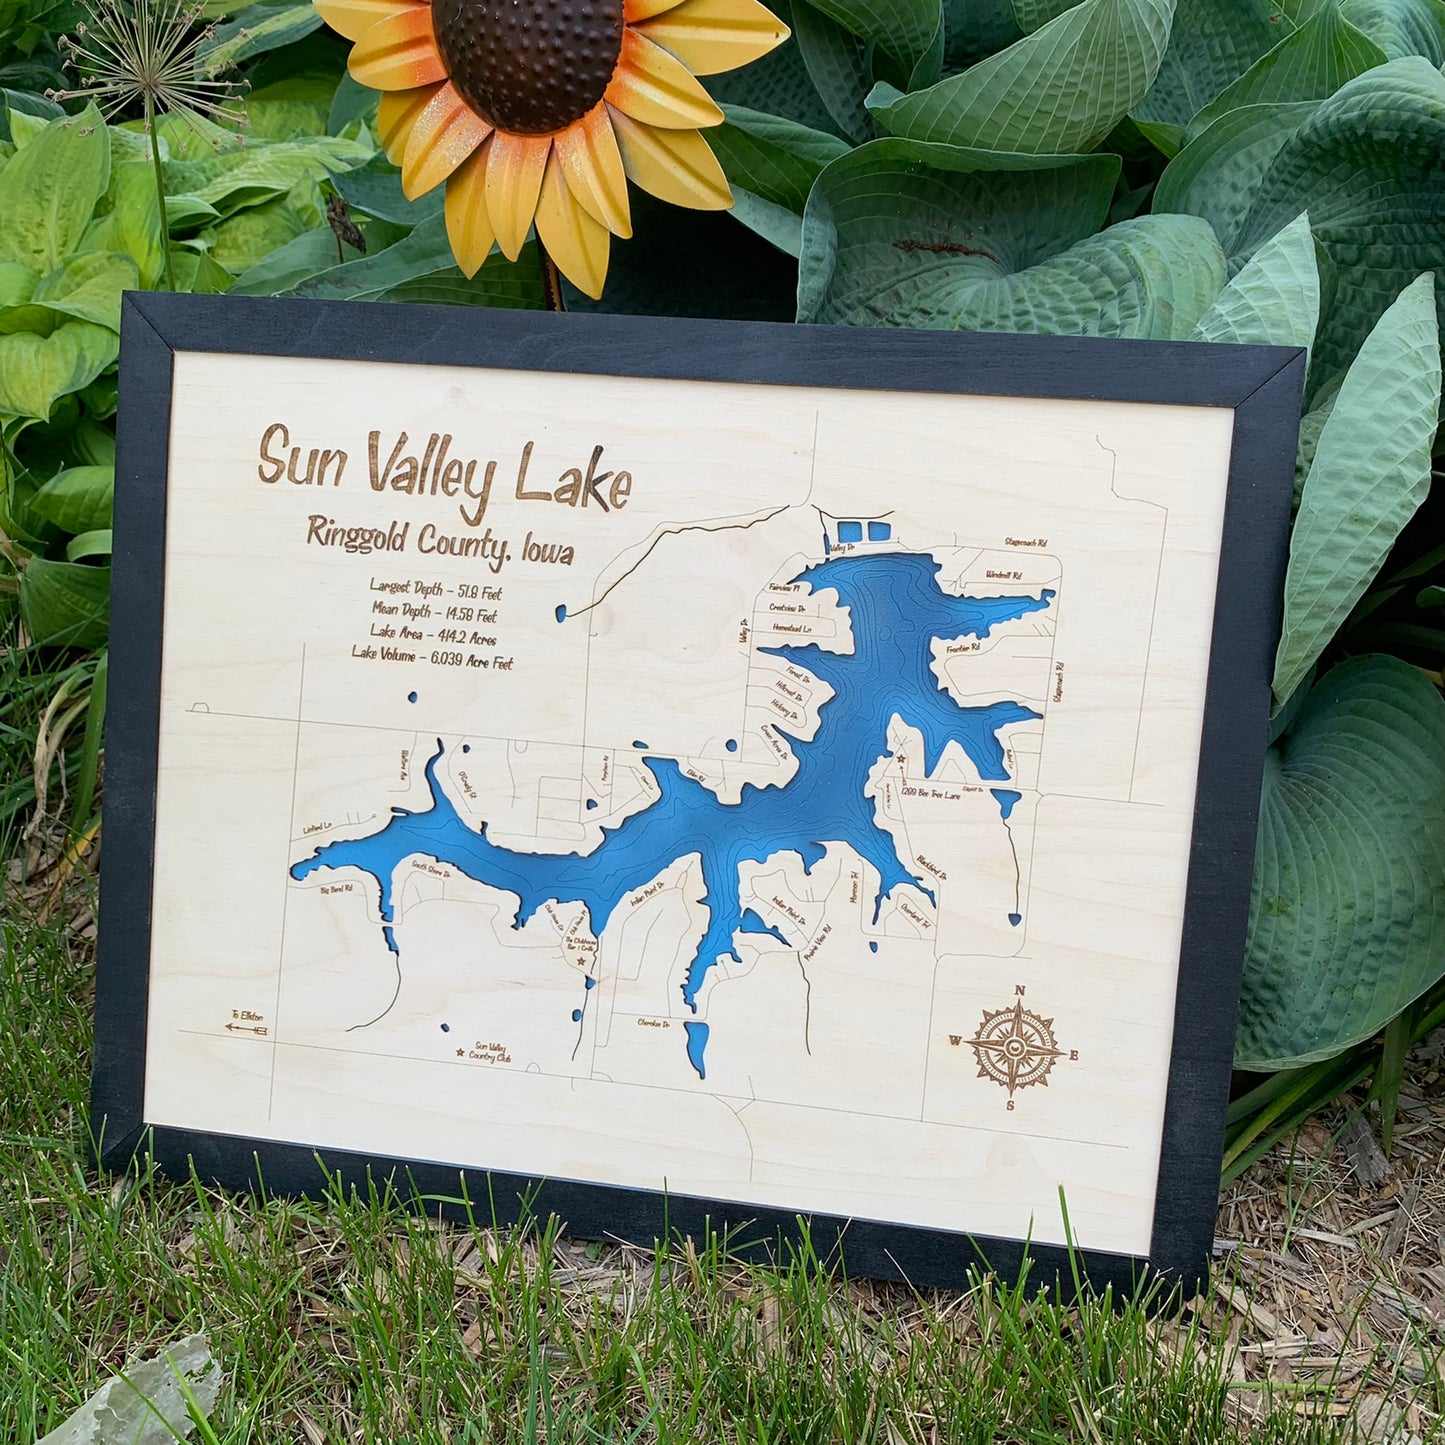 Laser Cut Engraved Wood Lake Map - Sun Valley Lake - Ringgold County Iowa